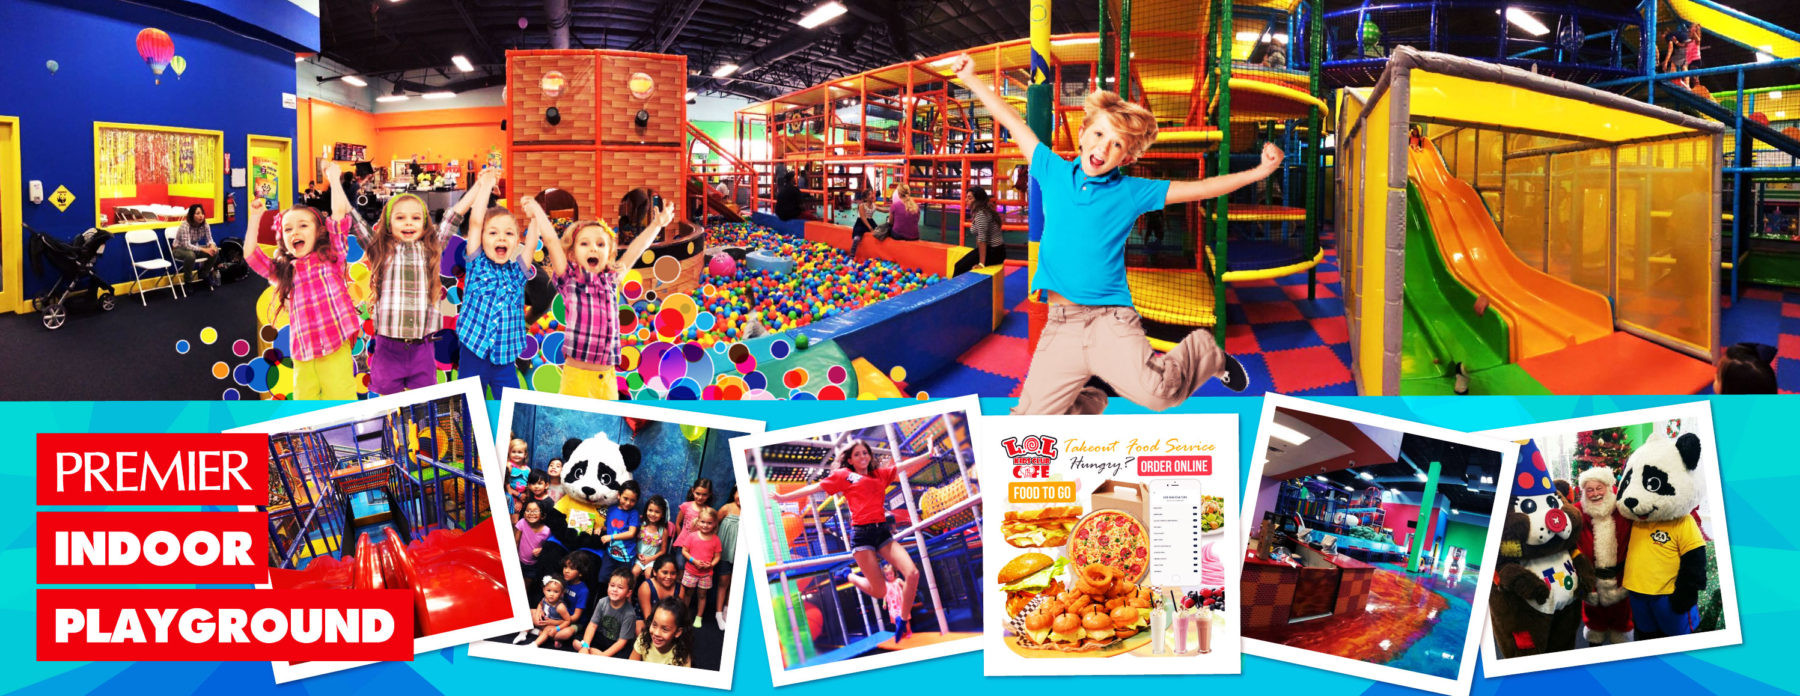 Kids Club Indoor Playground
 LOL KIDS CLUB – Indoor Playground